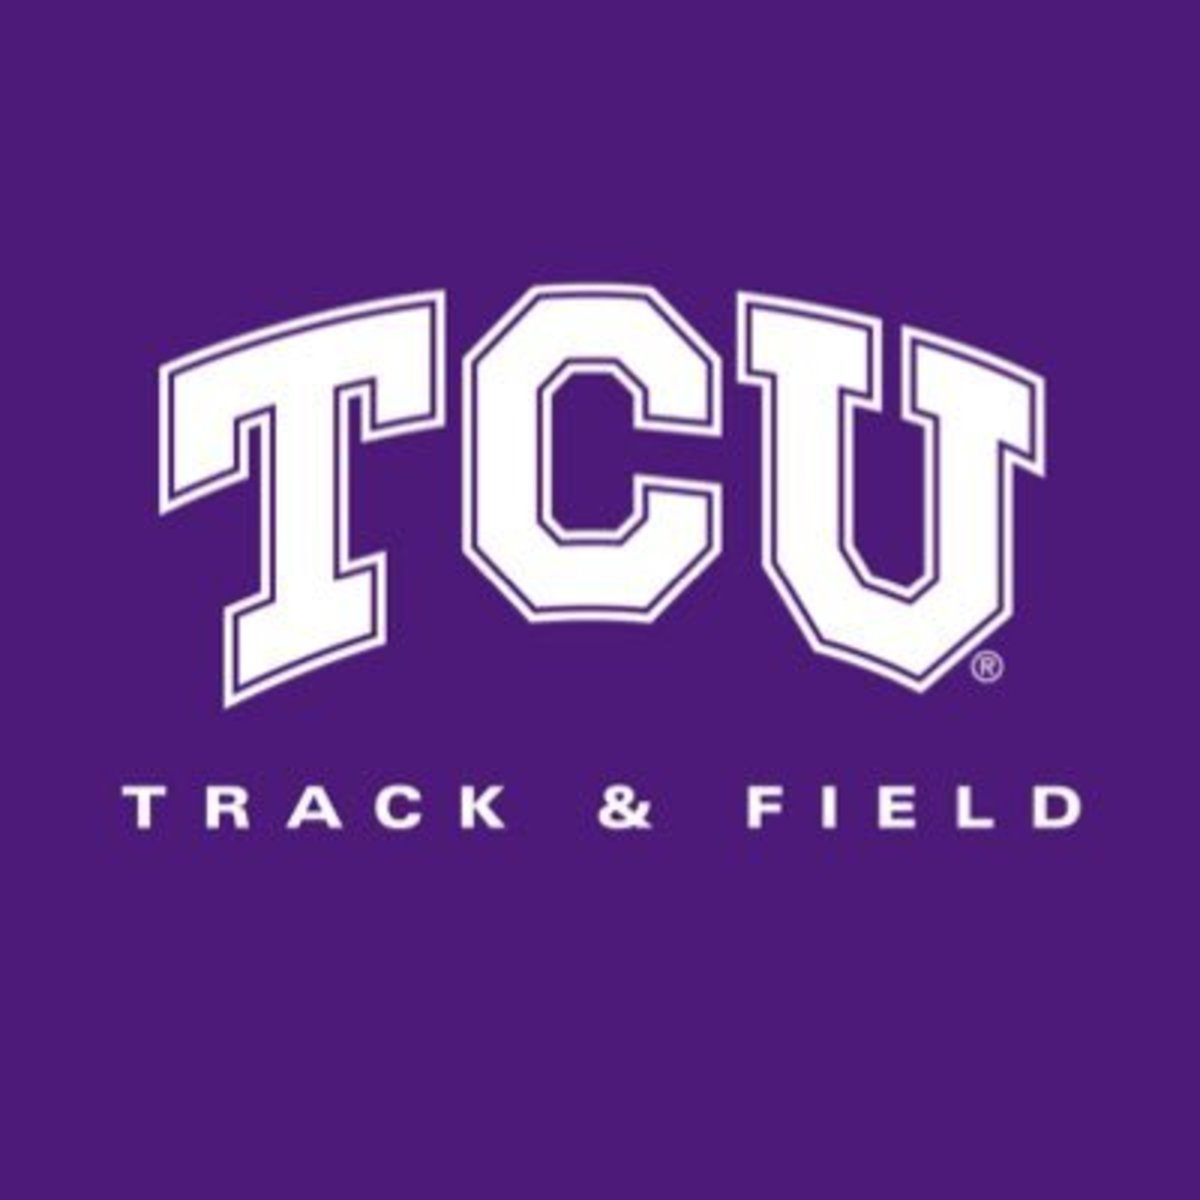 Twitter: TCU Track & Field Logo